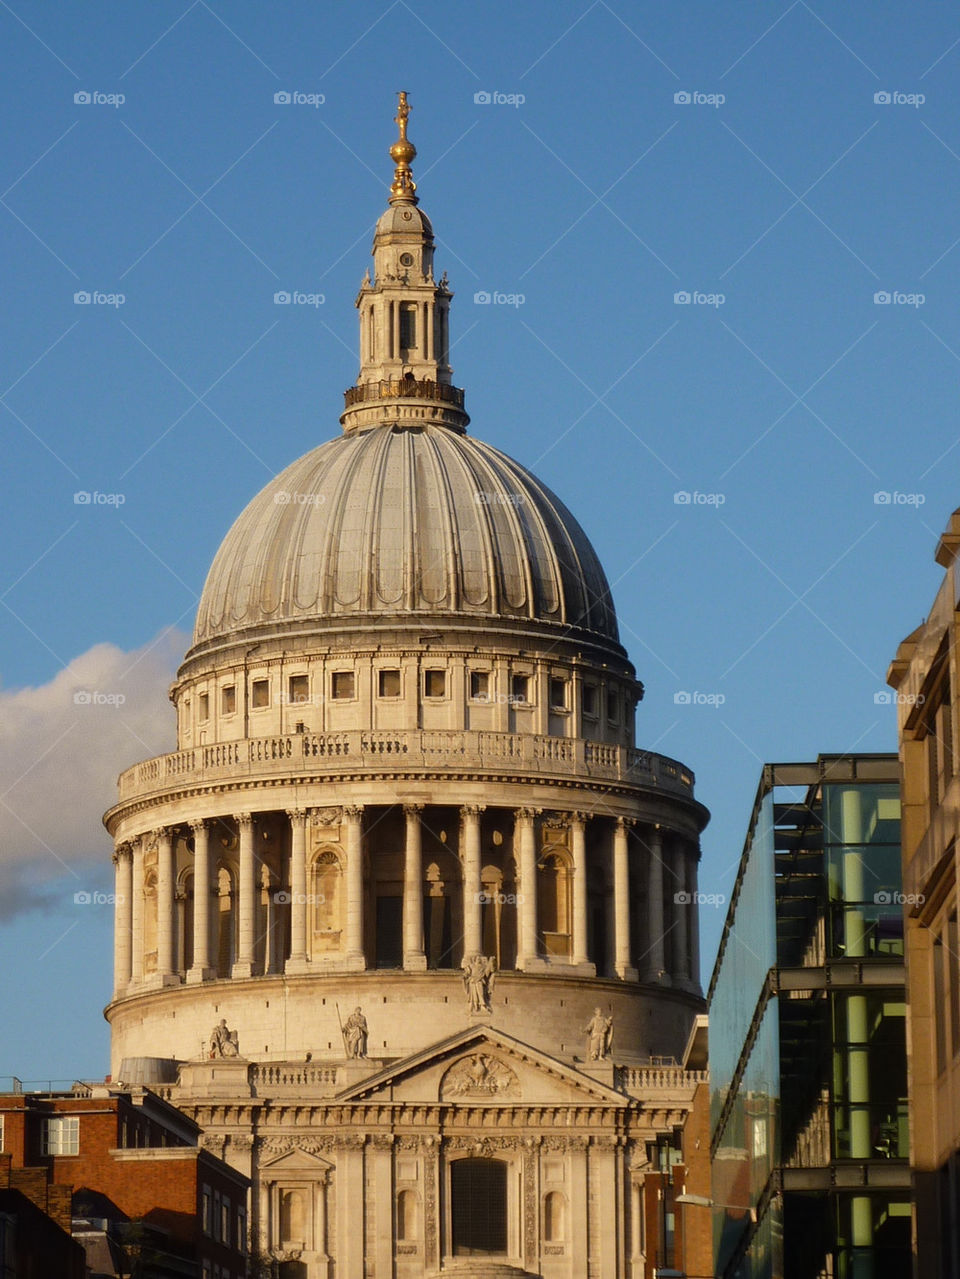 london architecture statues dome by lizajones